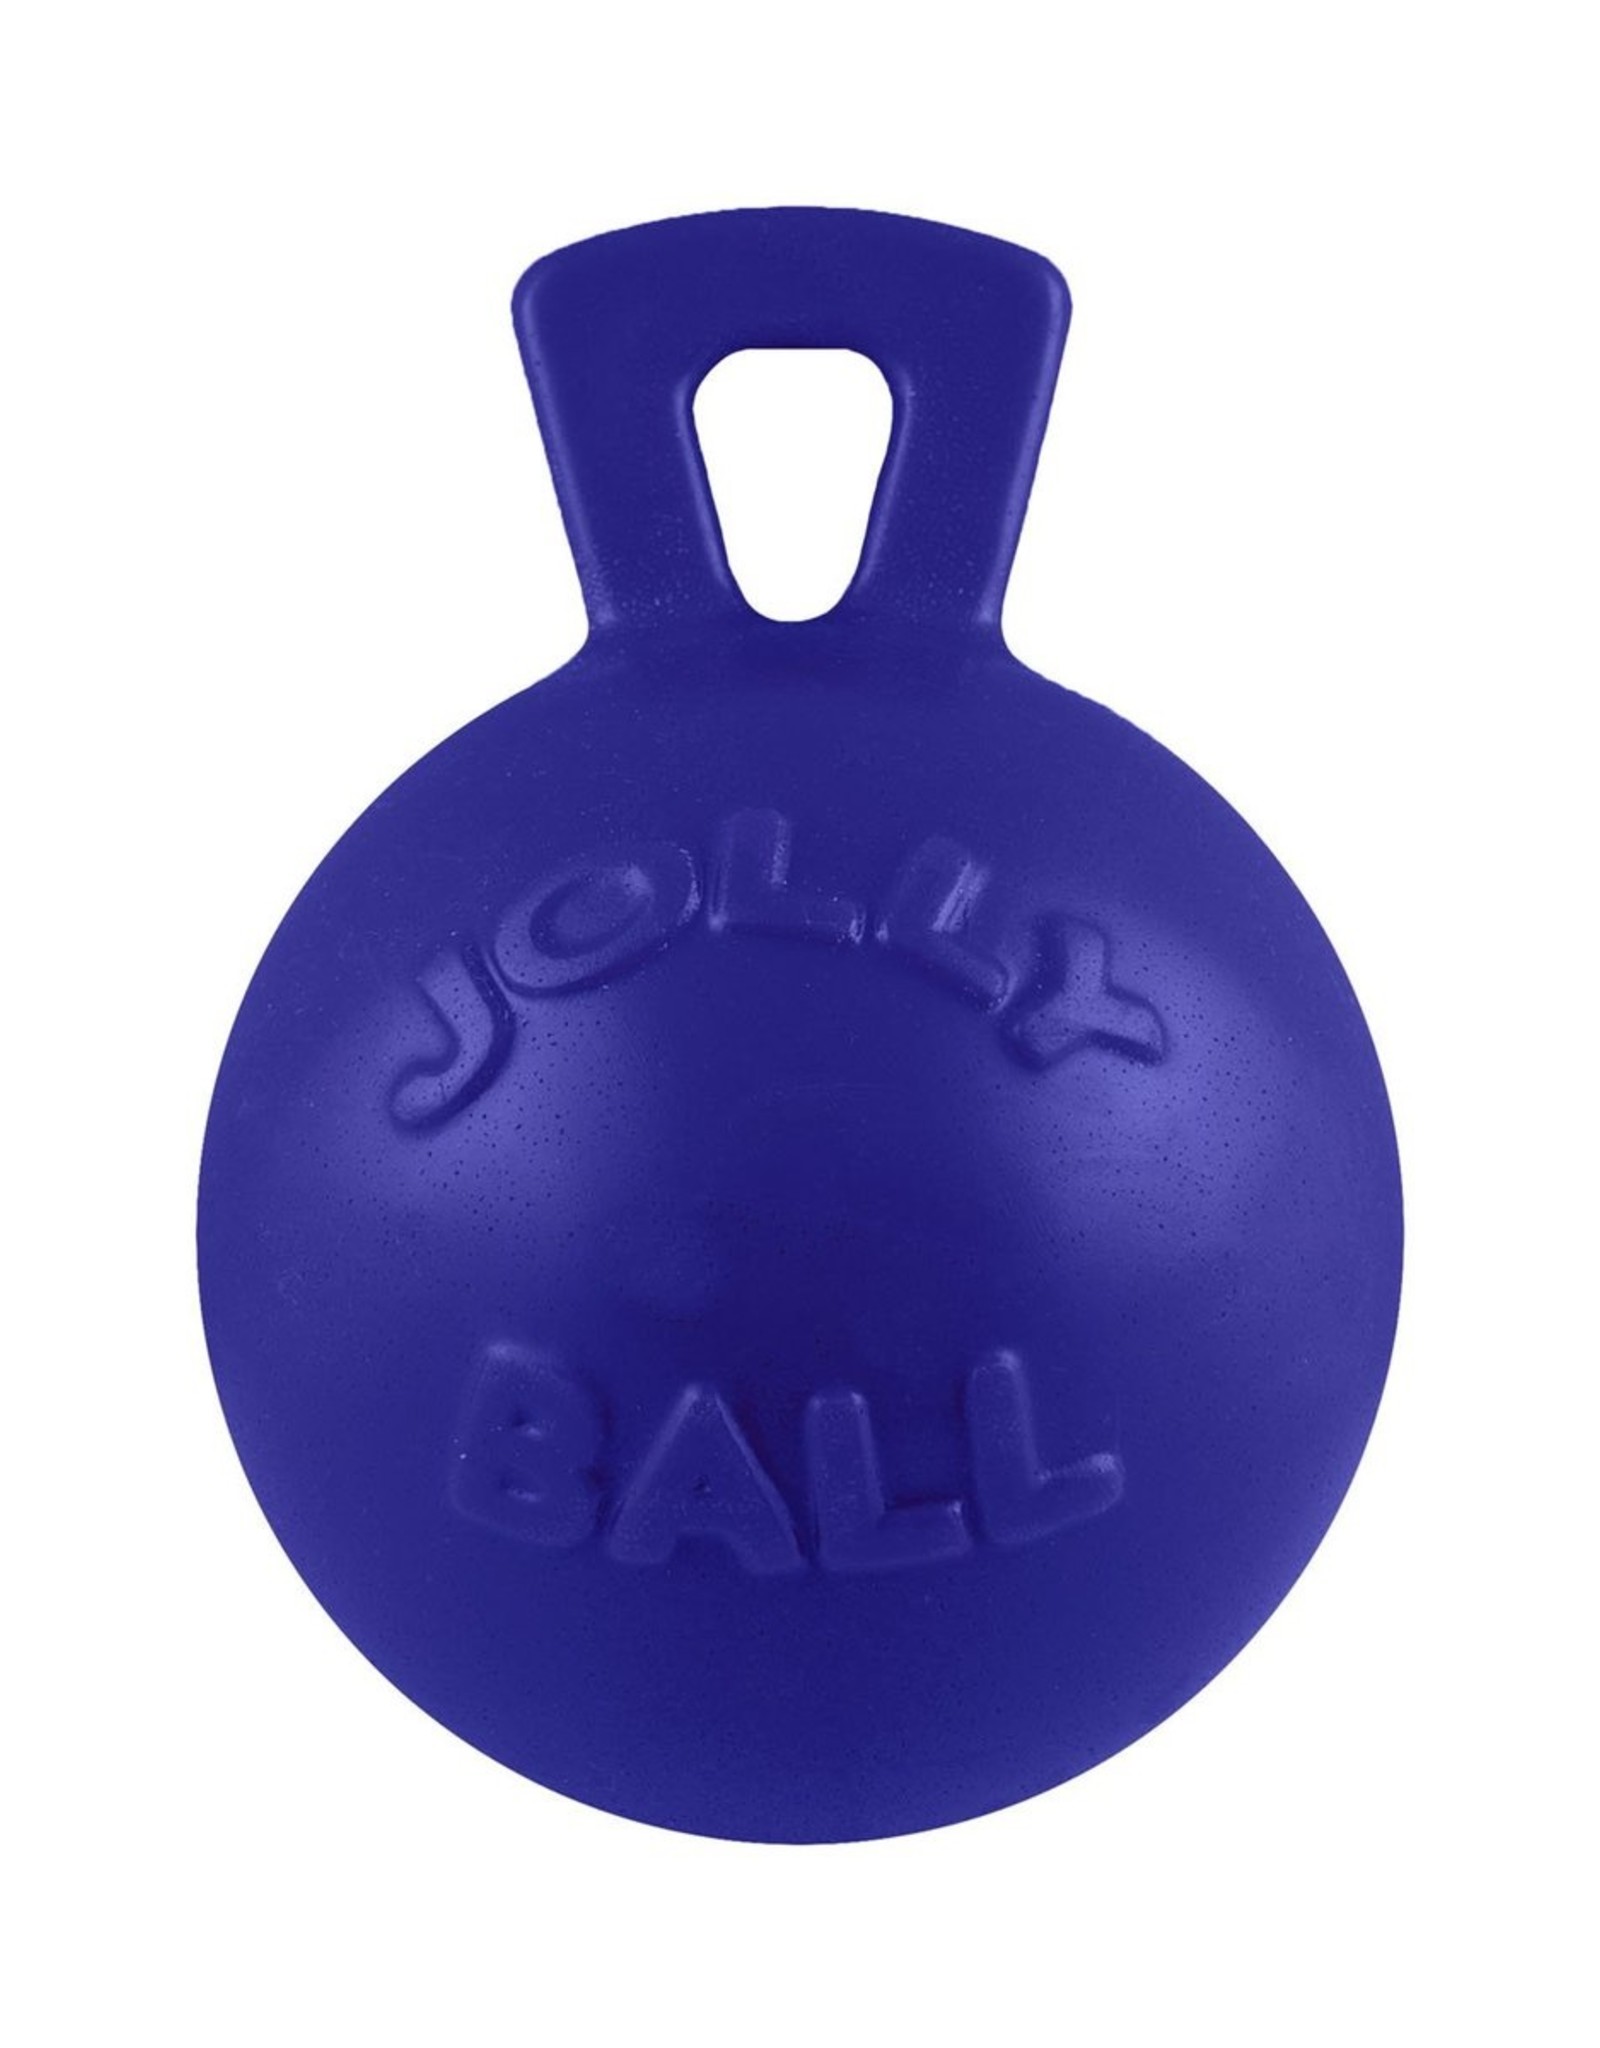 JOLLY PETS JOLLY BALL TUG-N-TOSS  8" BLUE LARGE